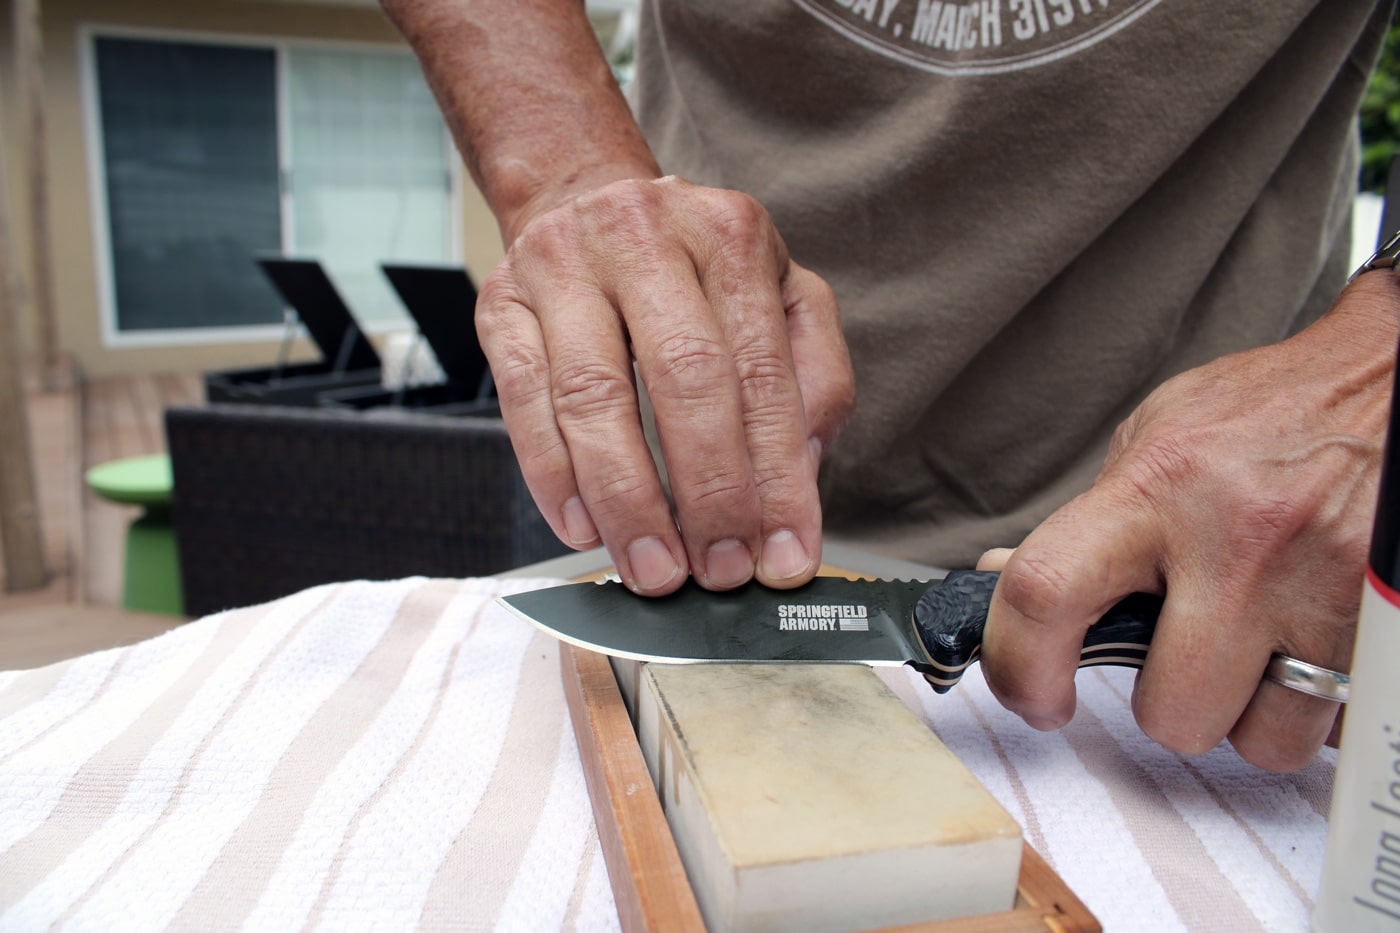 Understanding Kitchen Knife Angles - Work Sharp Sharpeners